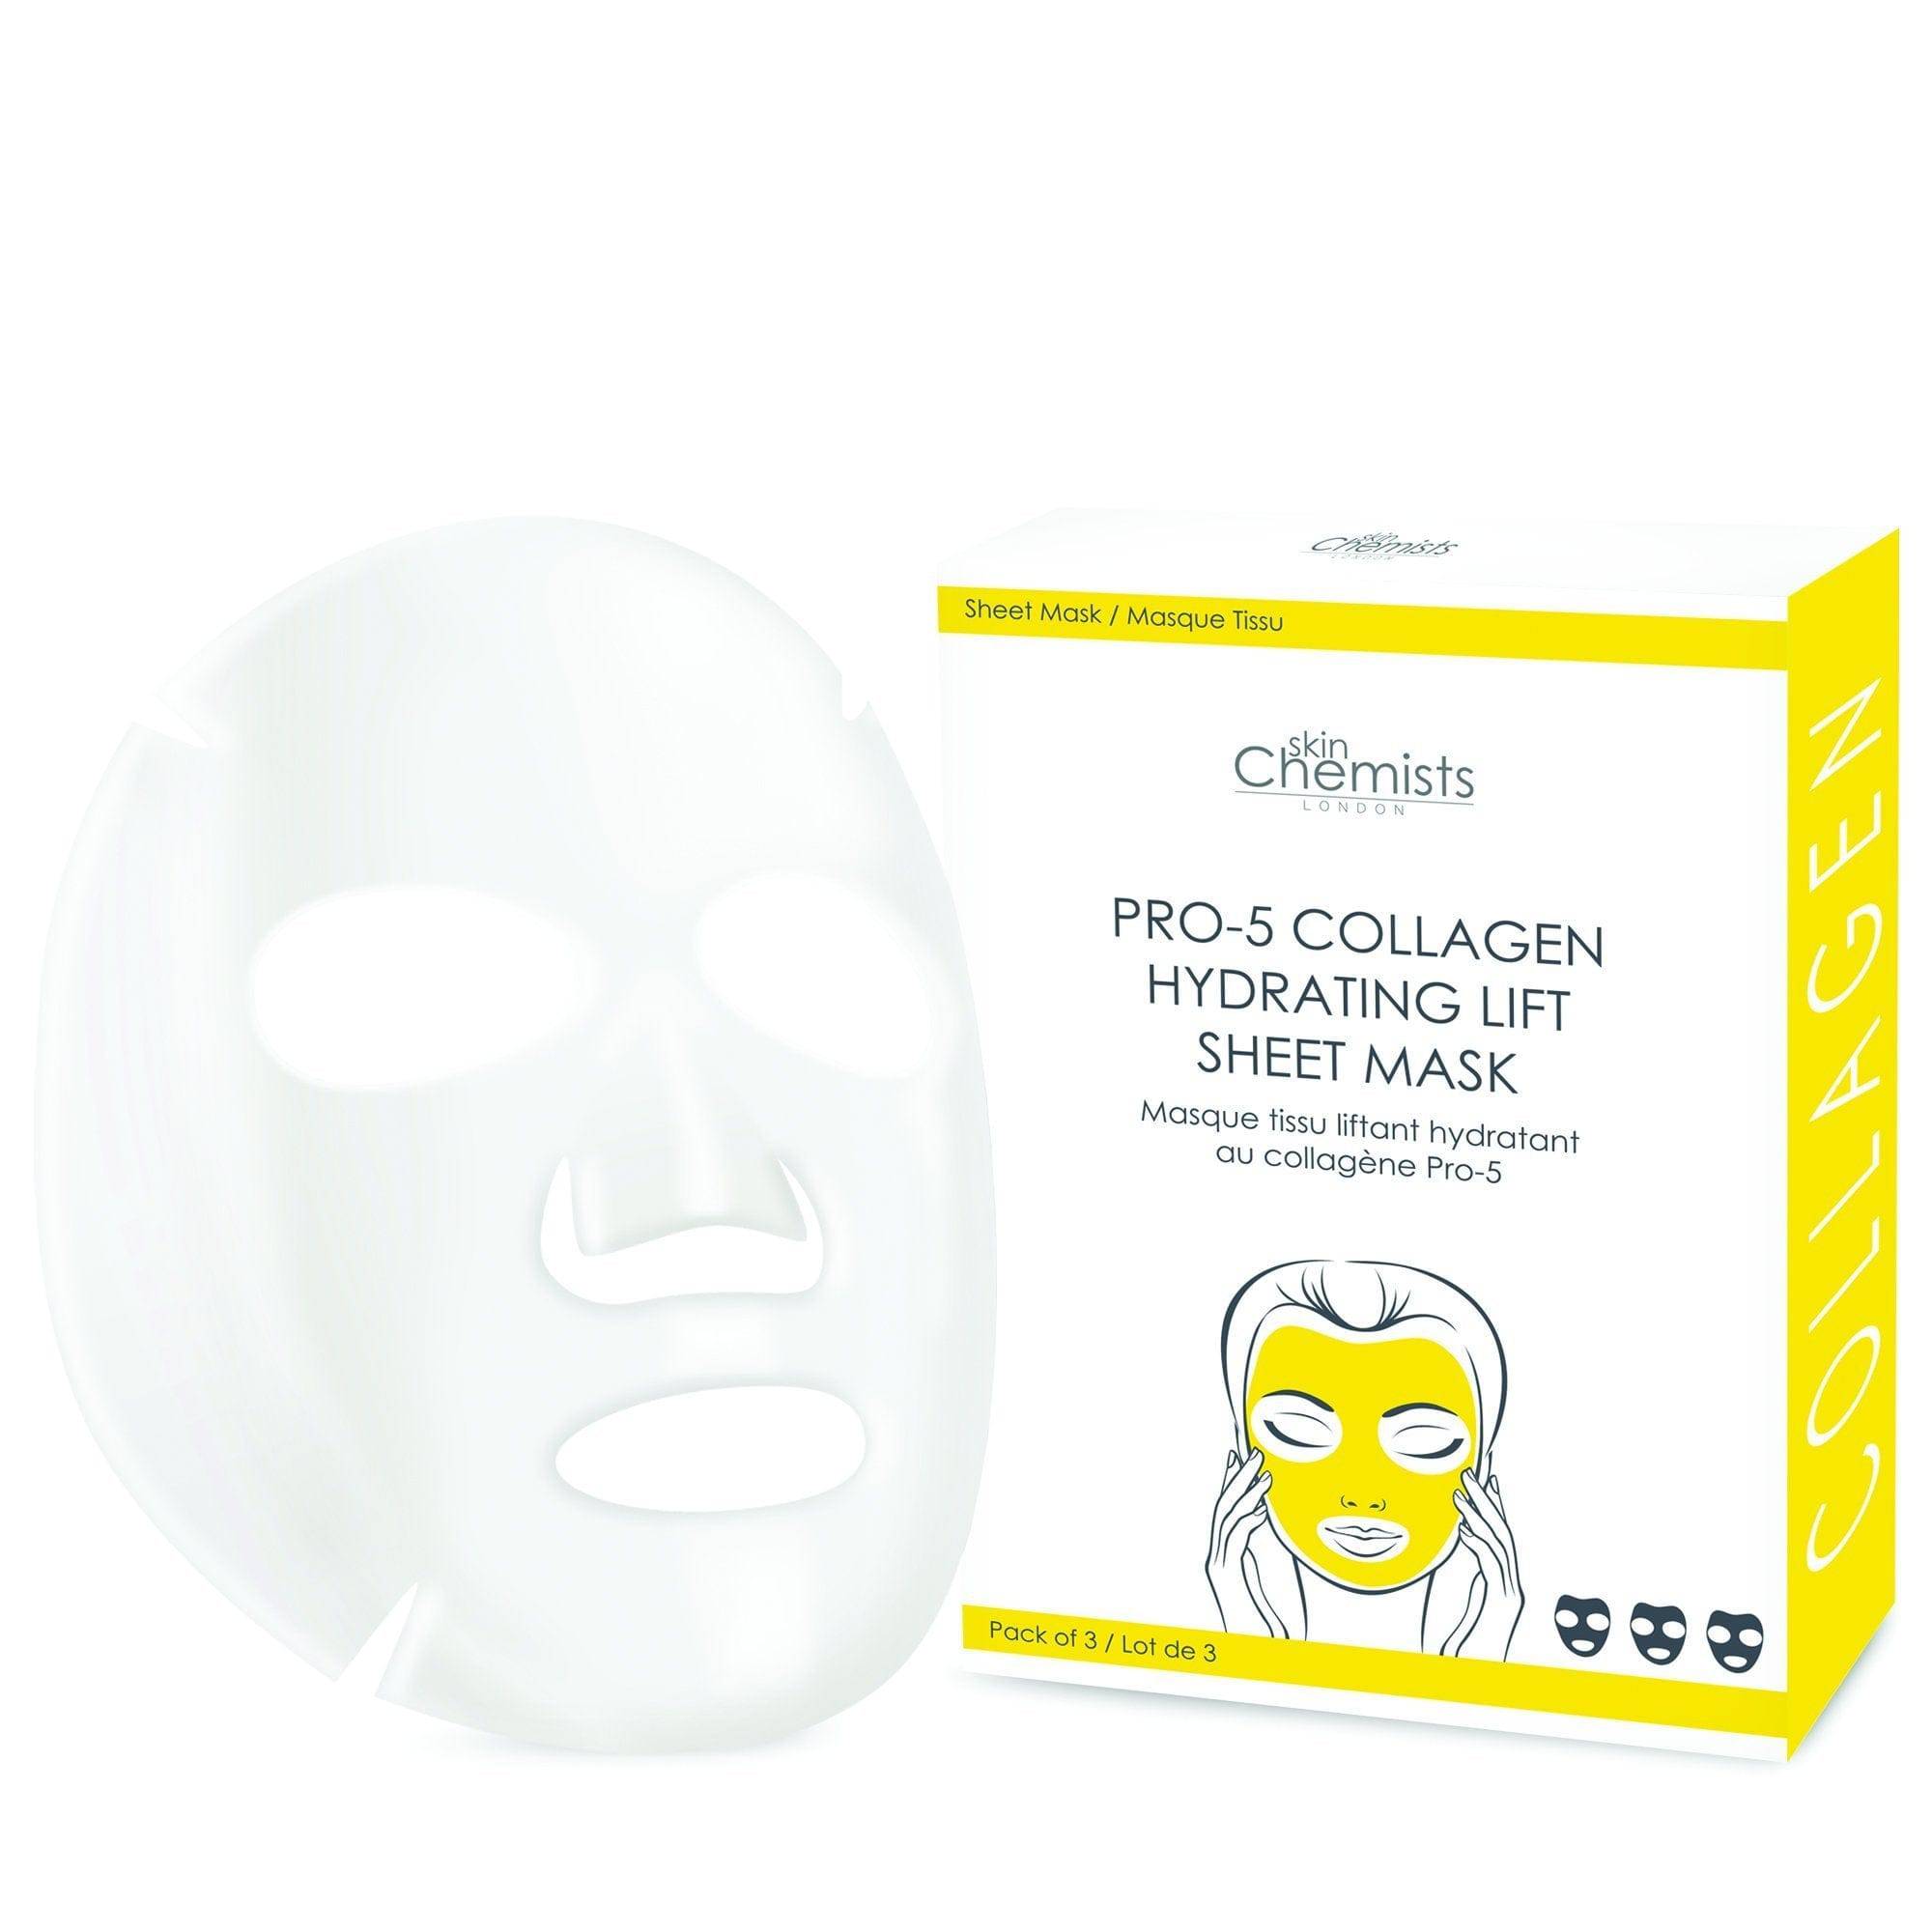 Pro-5 Collagen Hydrating Lift Sheet Mask - skinChemists